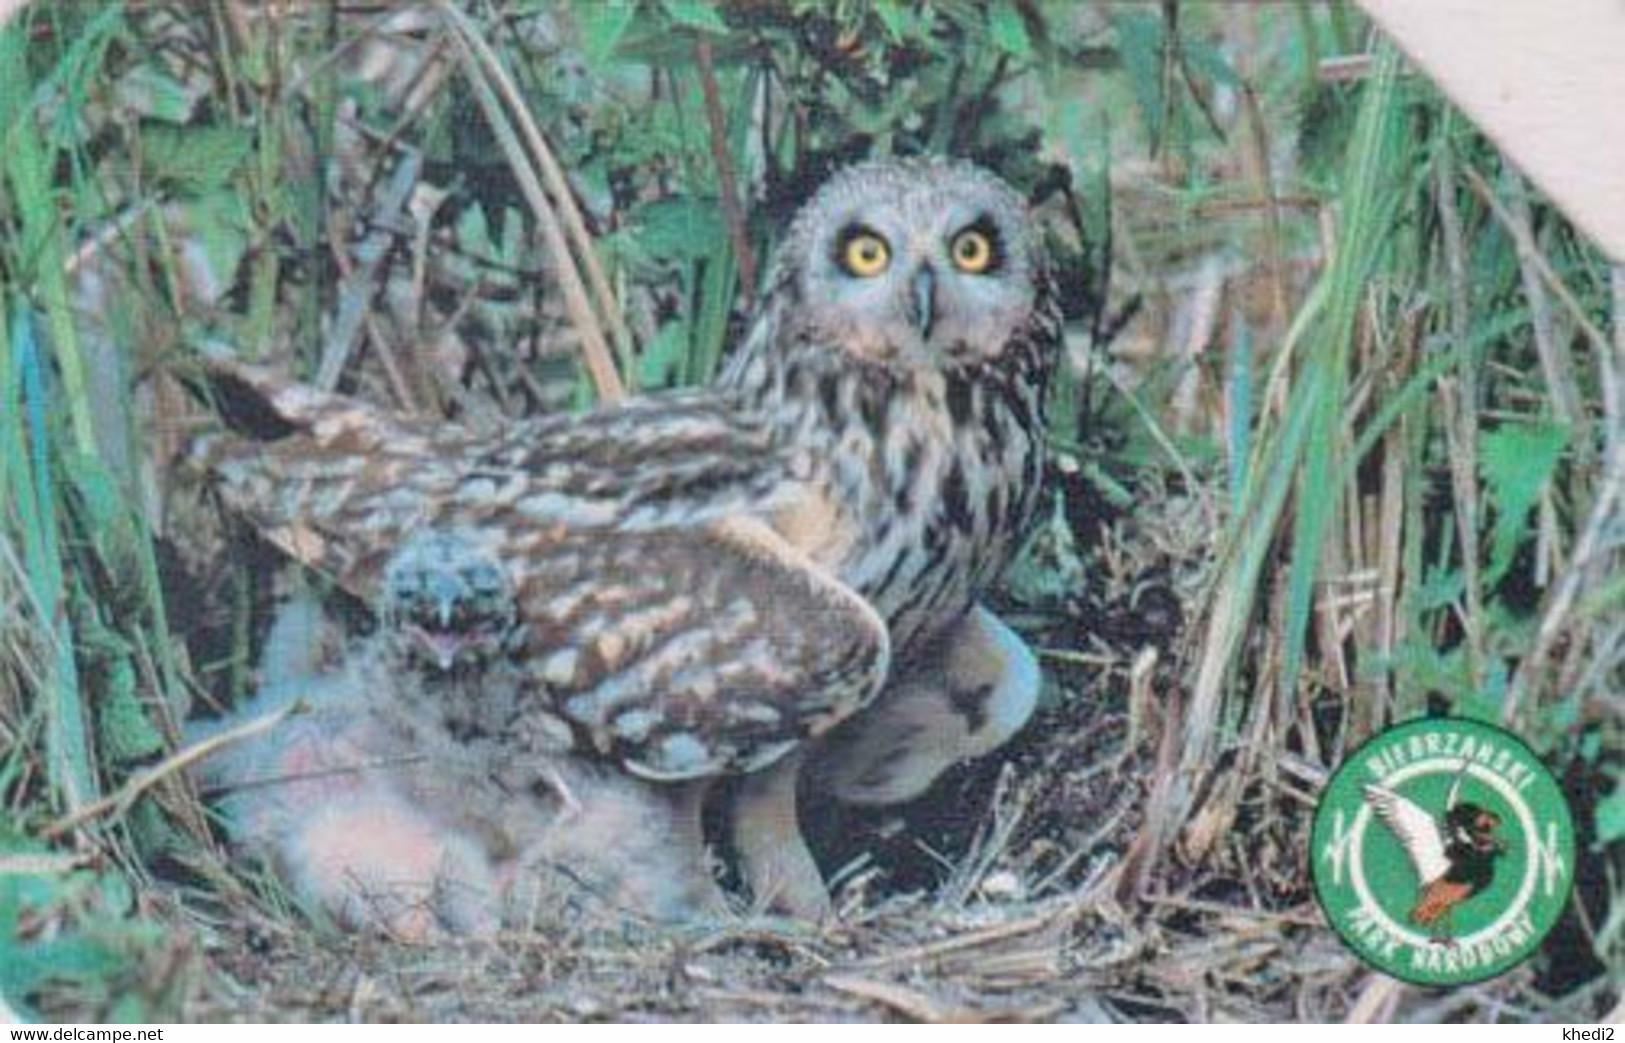 TC POLOGNE - ANIMAL / Série Bierbrzanski Park 510 - OISEAU HIBOU DES MARAIS - OWL BIRD & Chicken POLAND Pc - BE 5288 - Owls